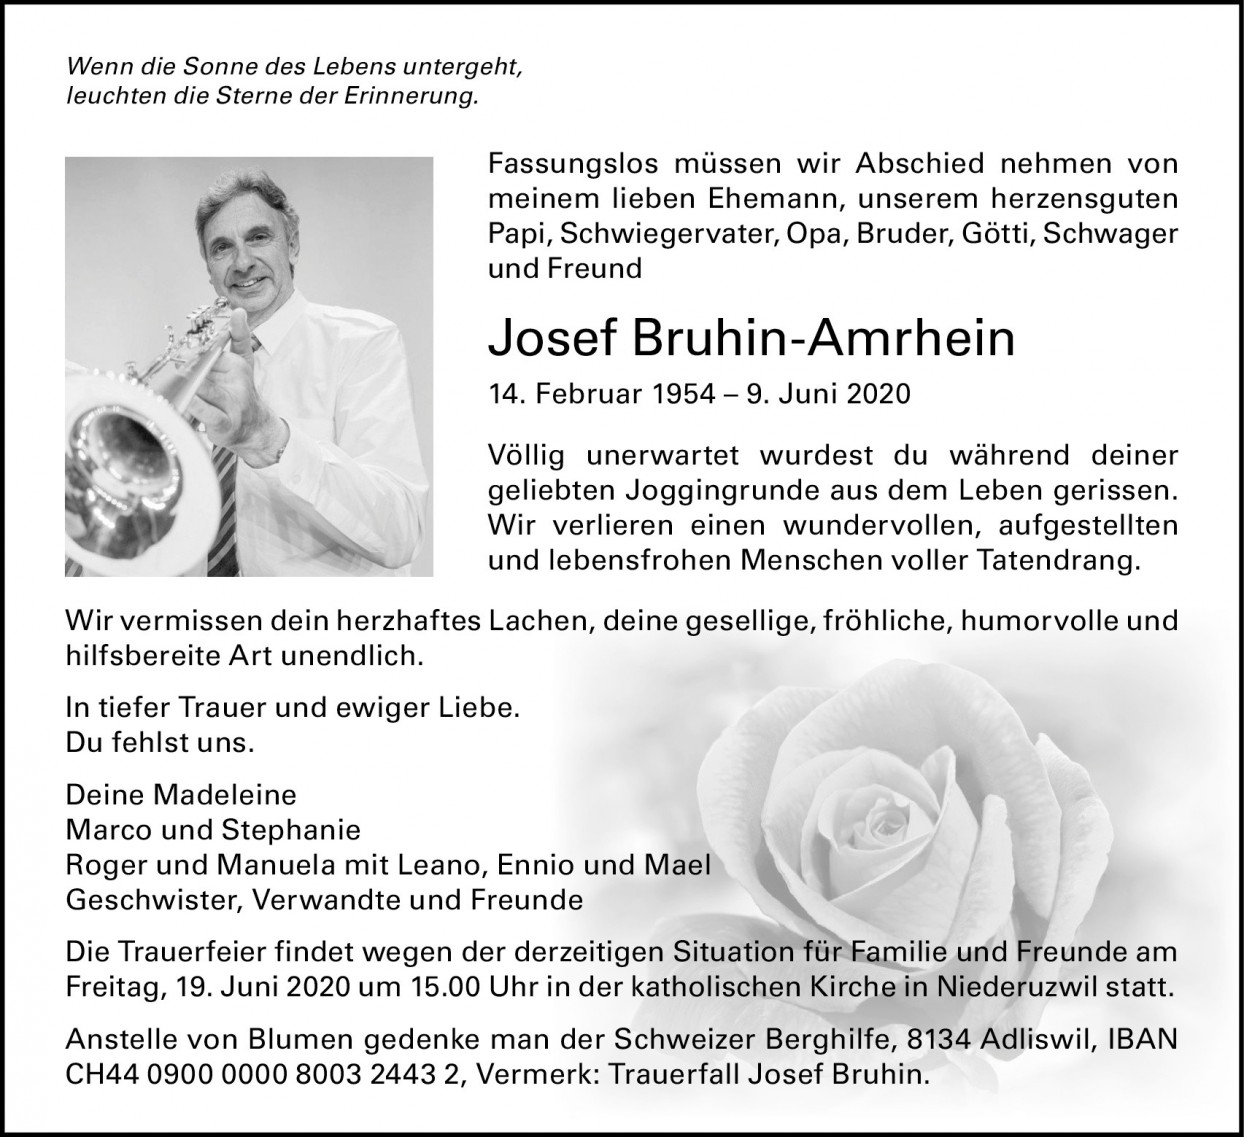 Josef Bruhin-Amrhein